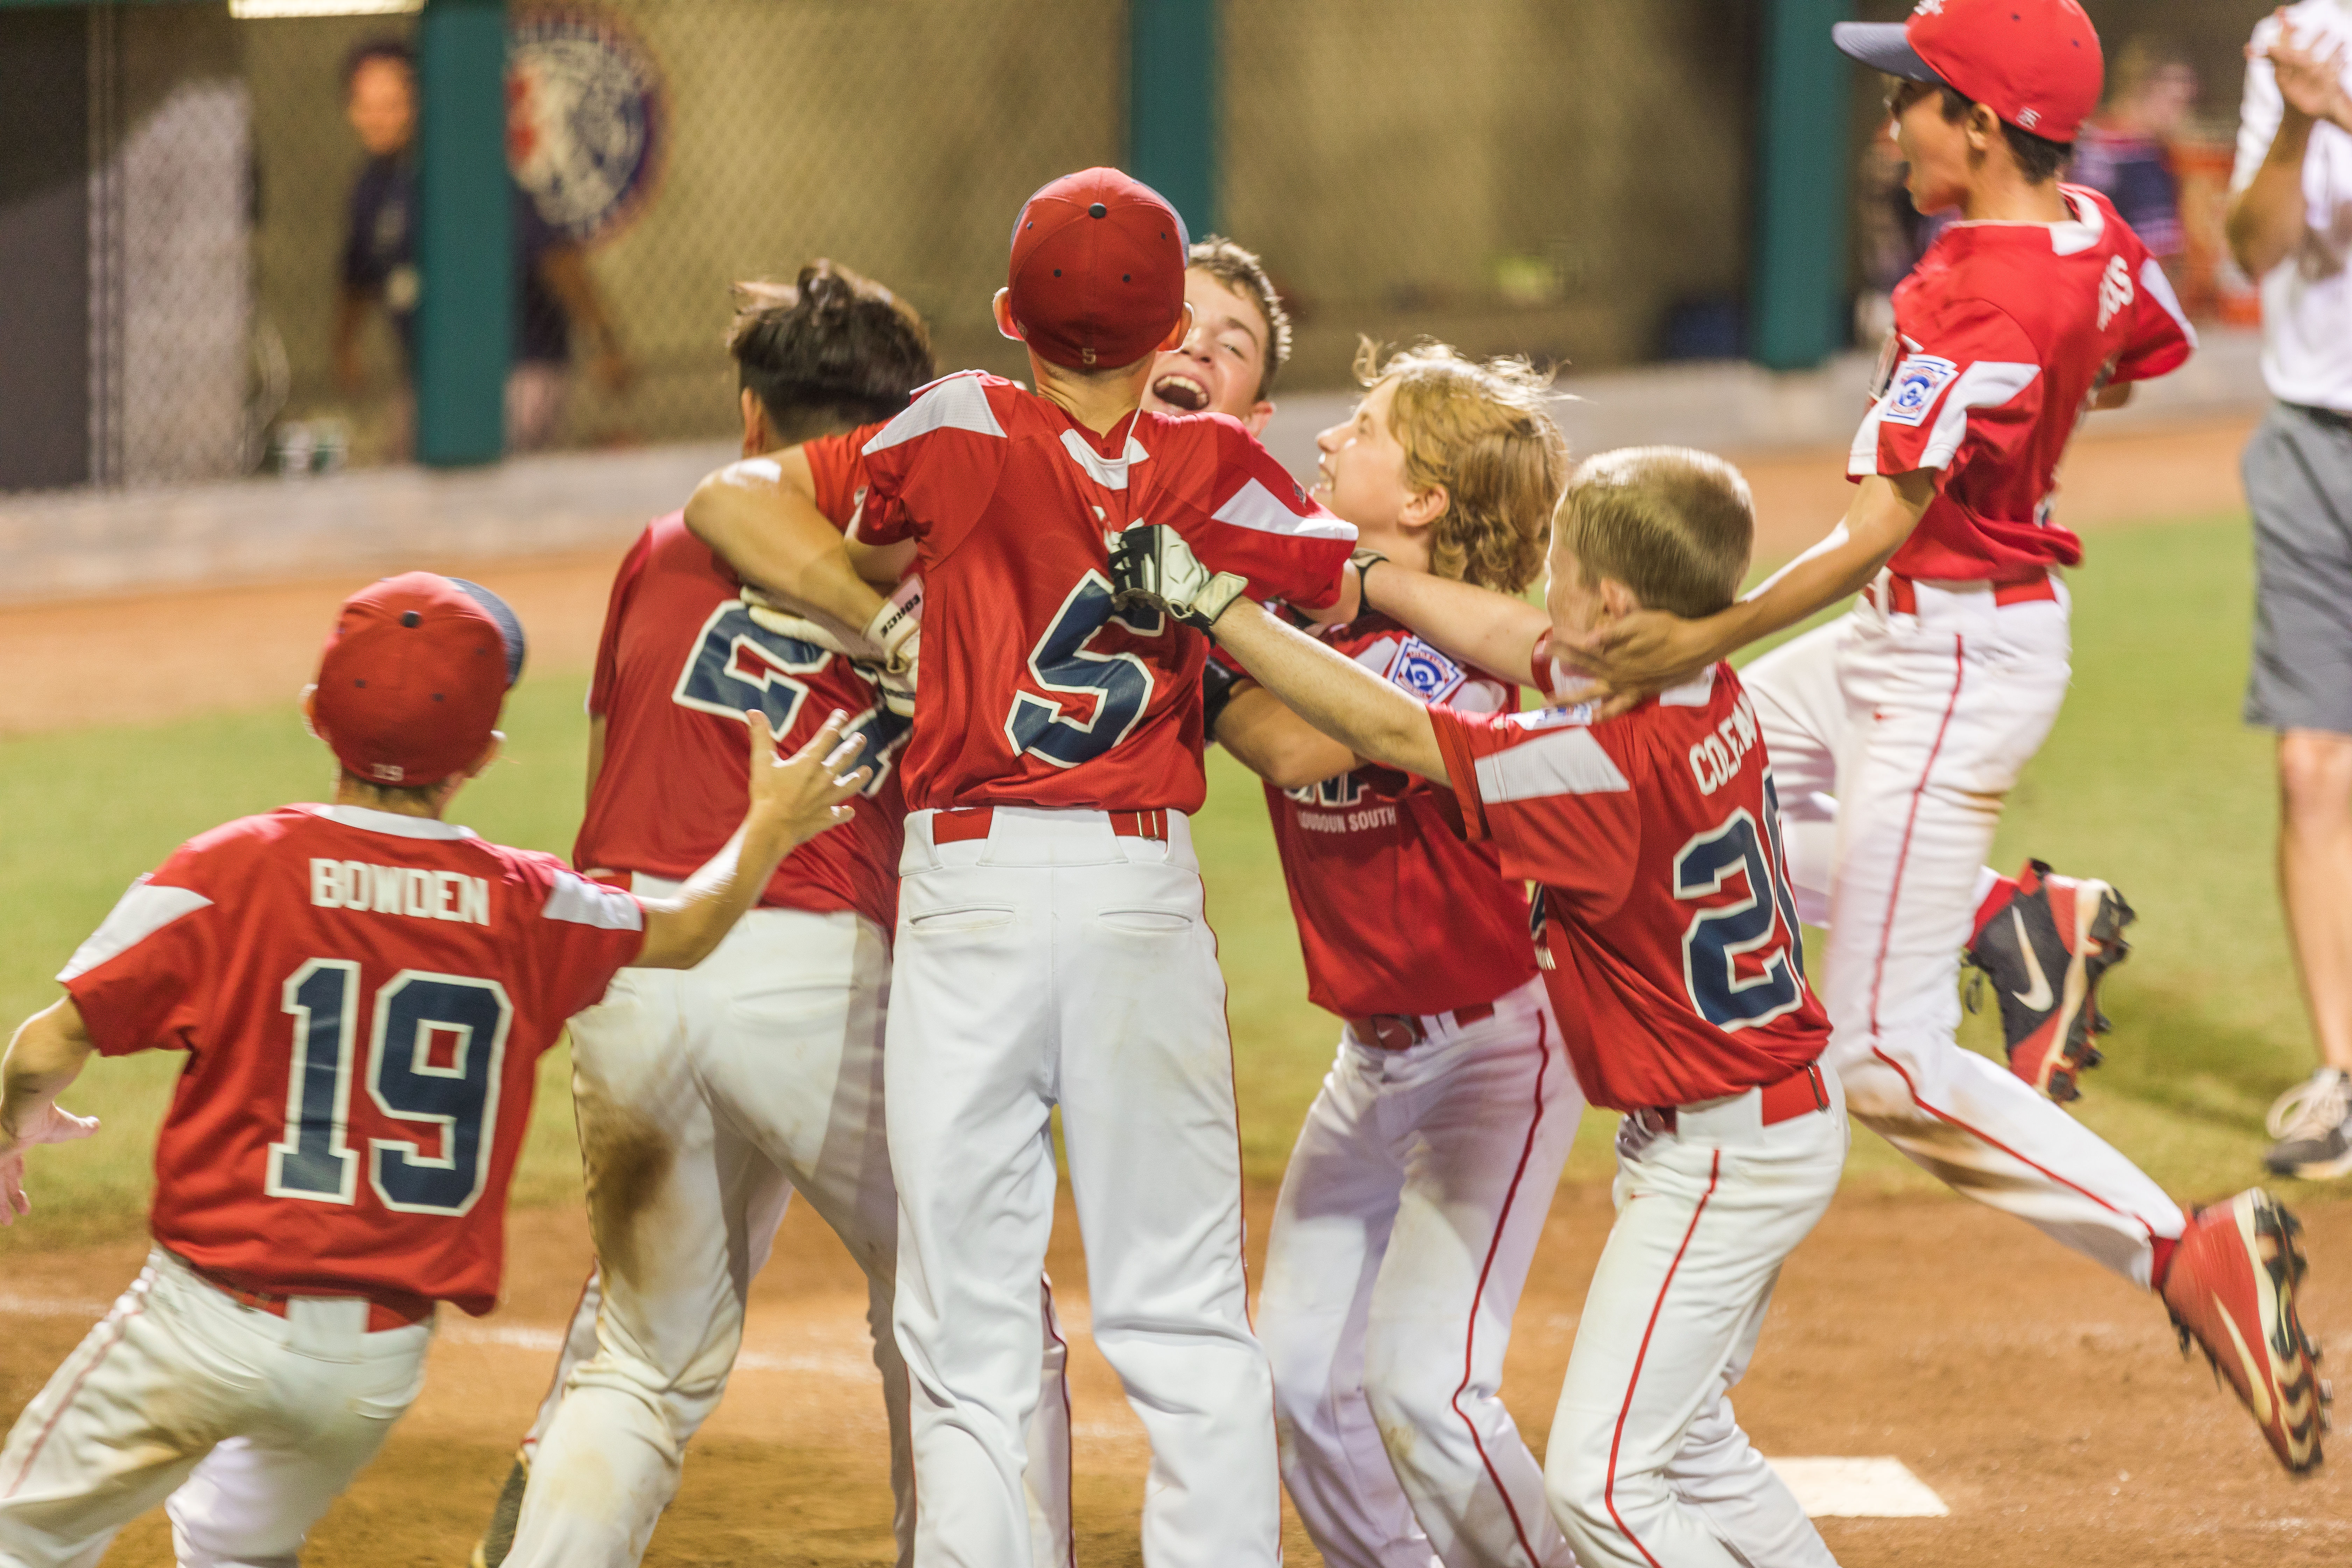 Video Underdog victory sends team to Little League World Series